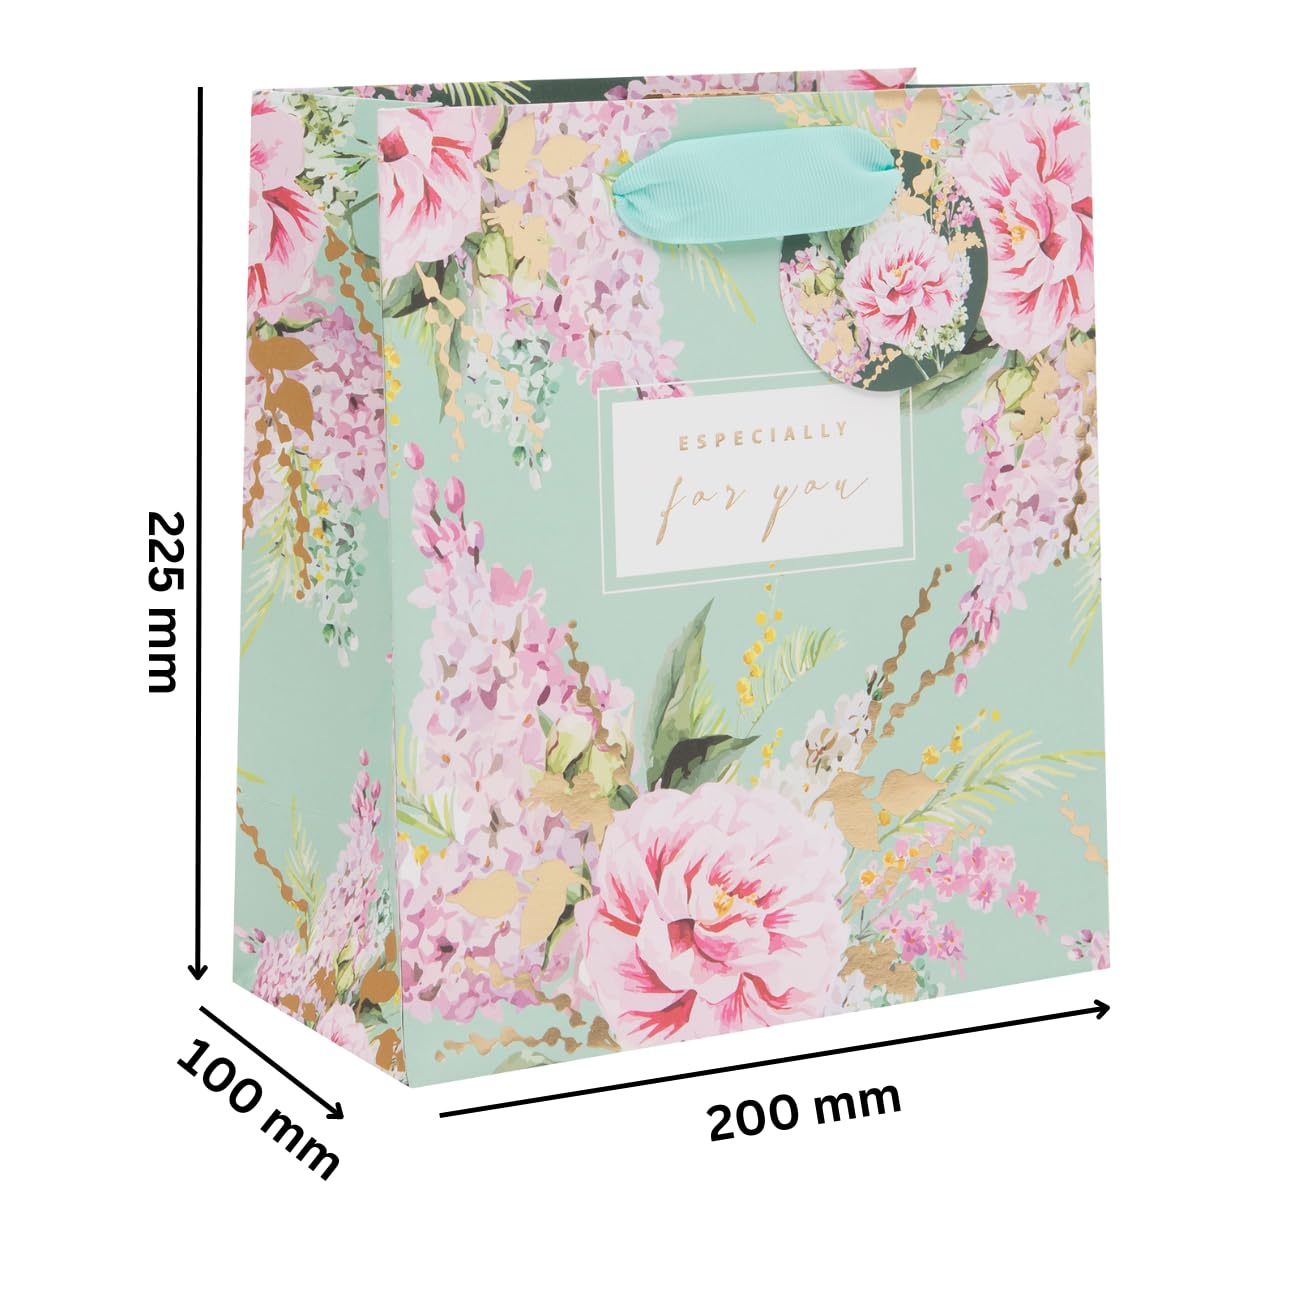 Glick Luxury Gift Bag, Mint Green and Pink Floral Medium Celebration Wedding Birthday Stephanie Dyment Wrap Multi-Colour, 200w x 225h x 100d mm